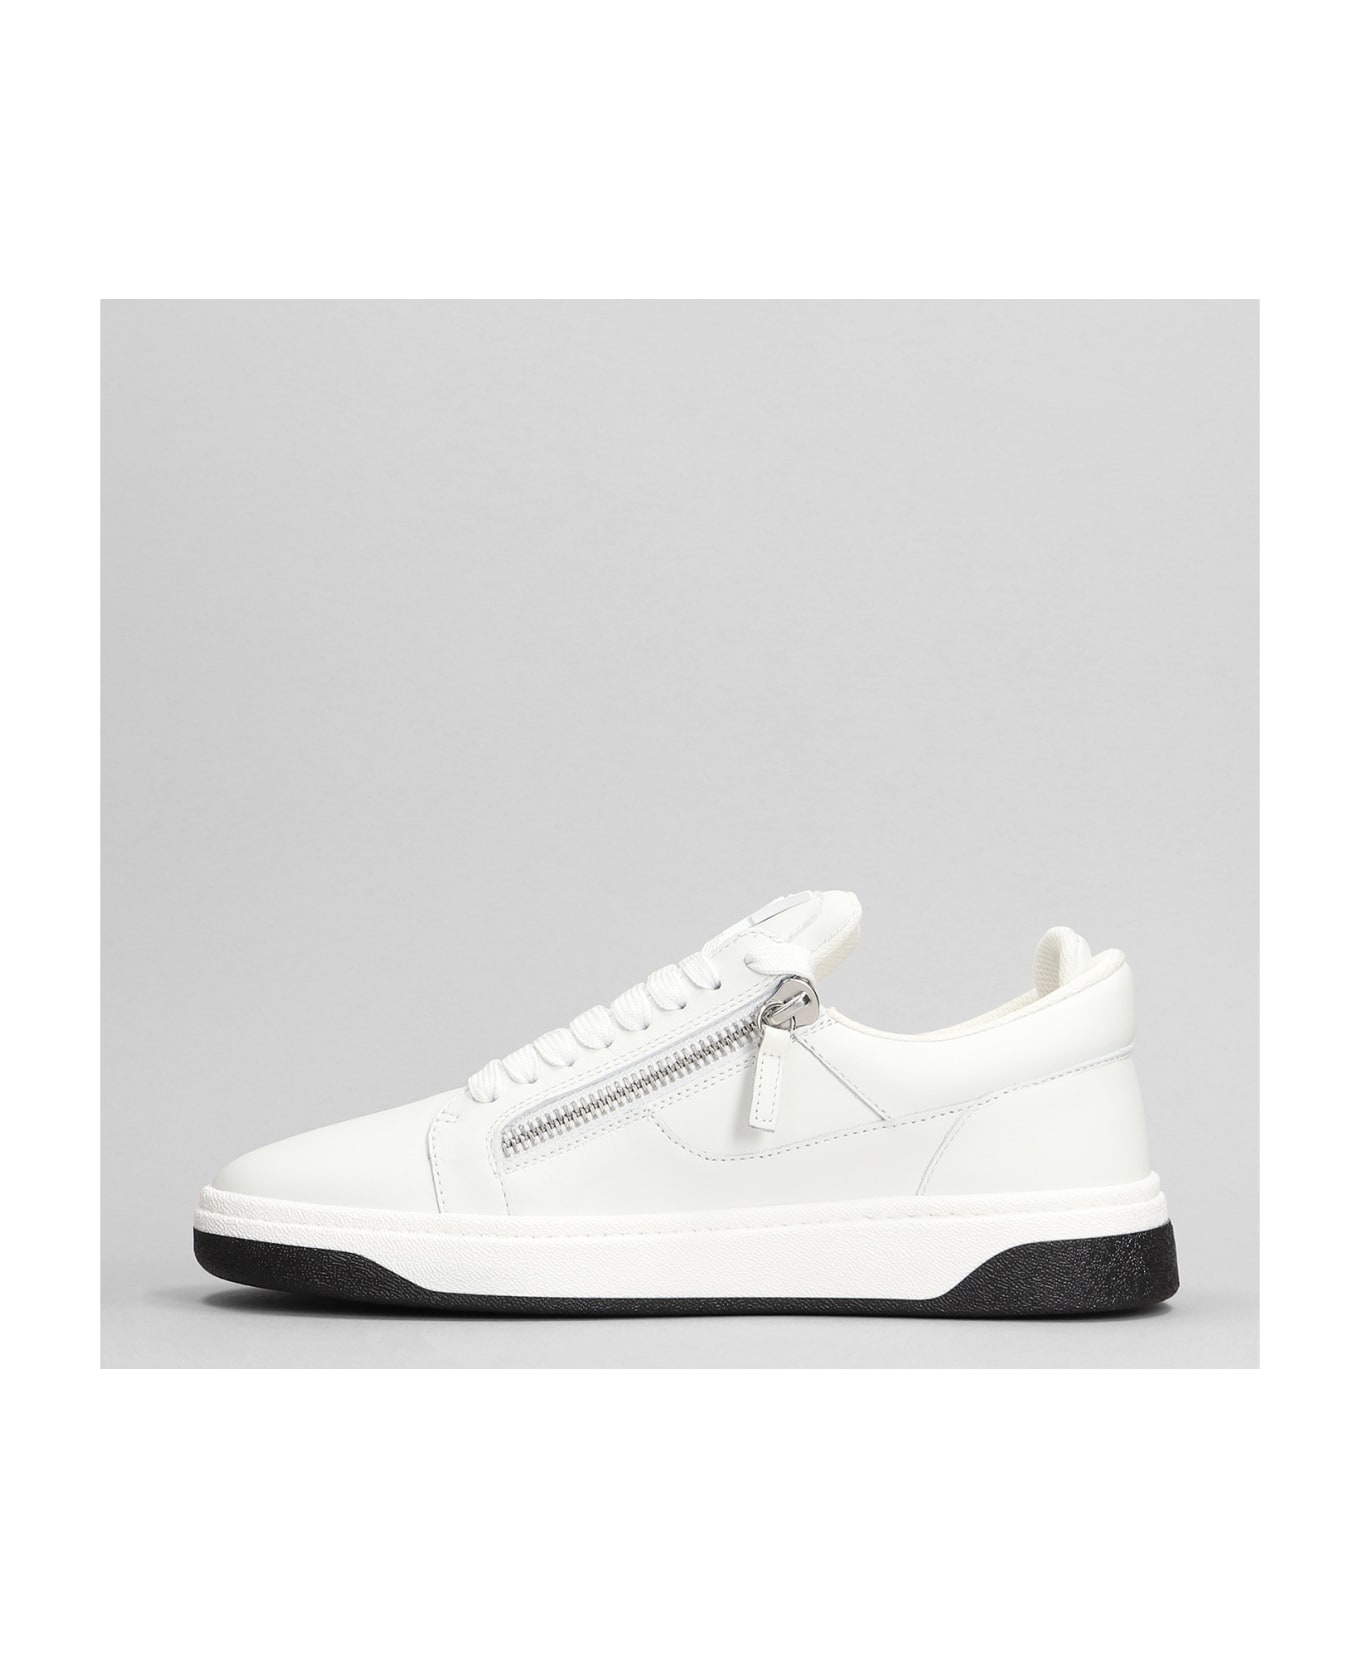 Giuseppe Zanotti Gz94 Sneakers In White Leather - white スニーカー